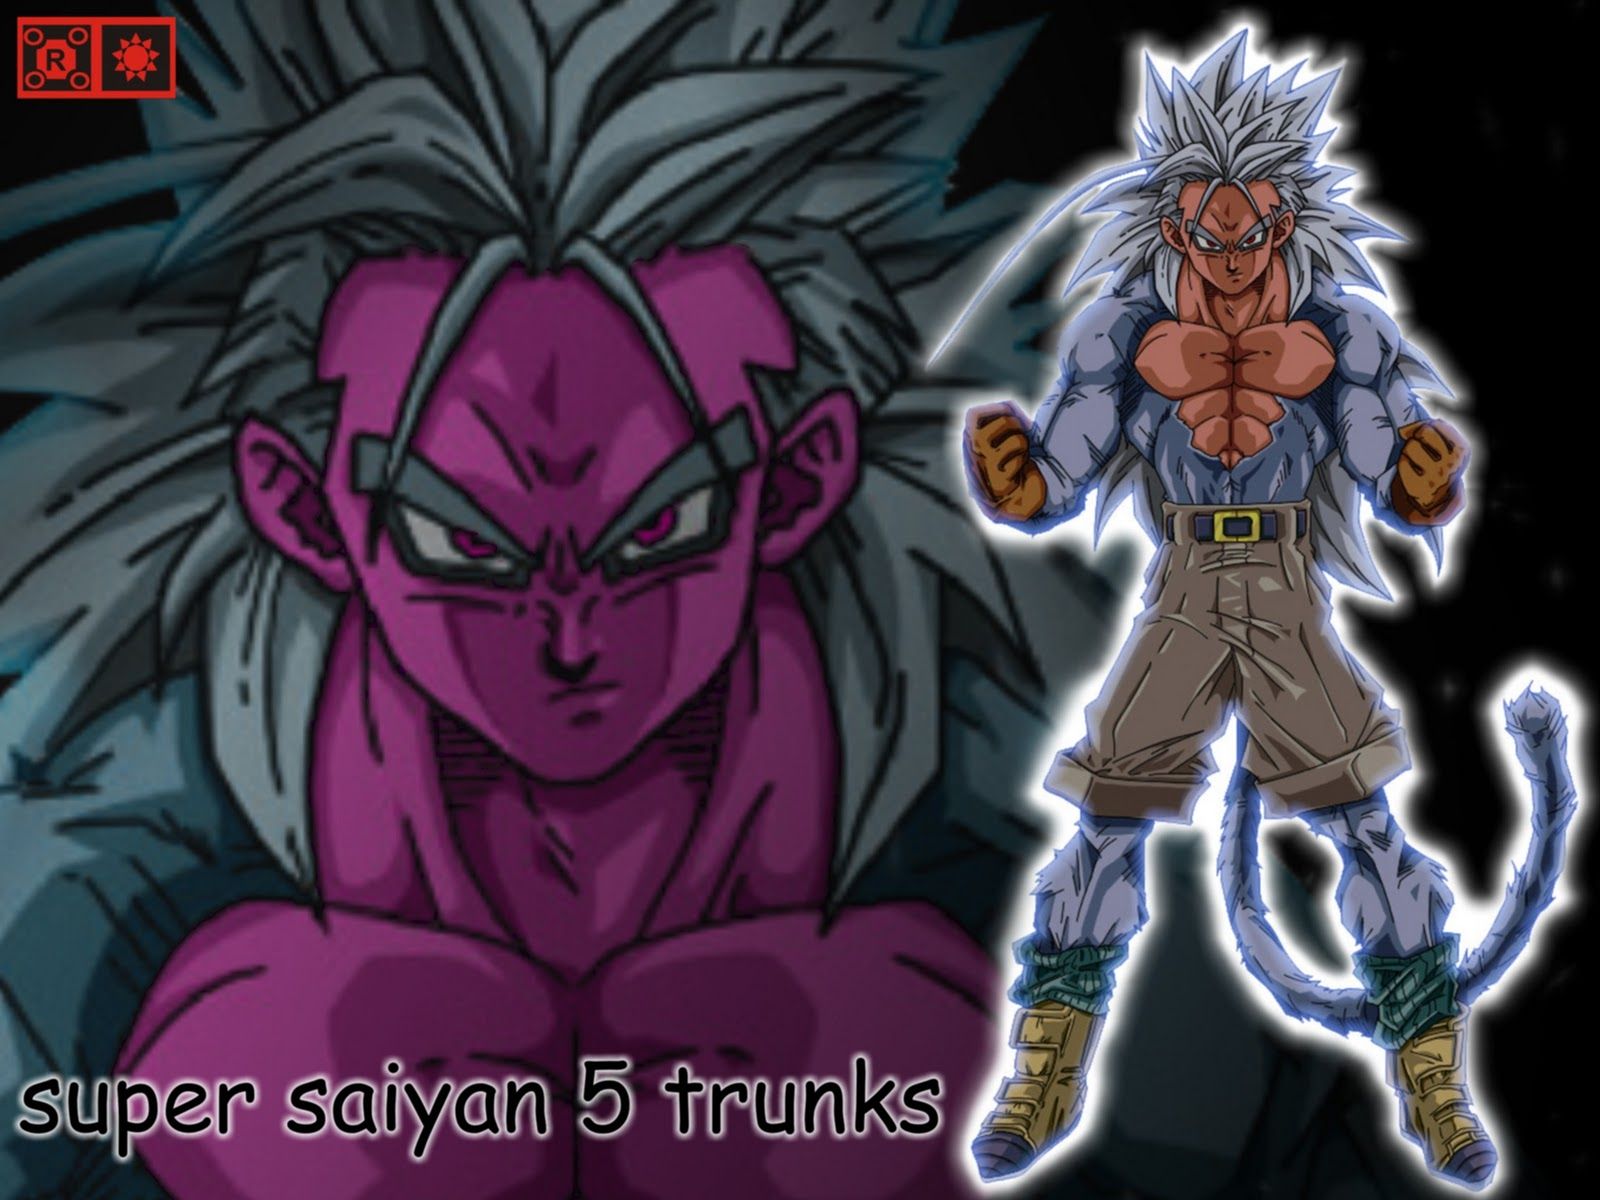 Dragon Ball Z Pictures Of Goku Super Saiyan 5 - HD Wallpapers and ...